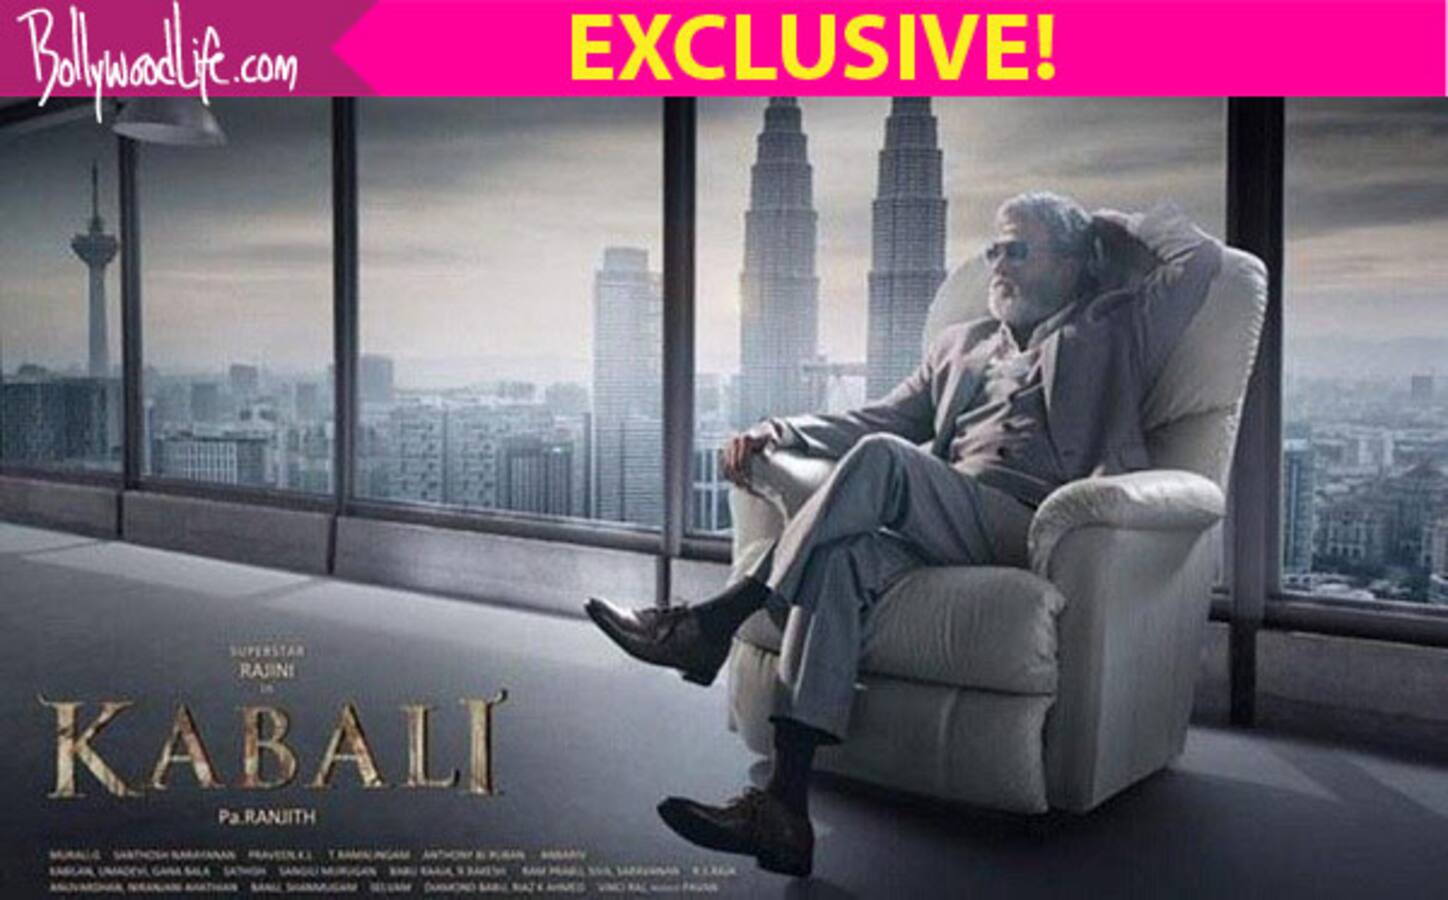 Kabali box office update: Rajnikanth's film opens to 100% occupancy